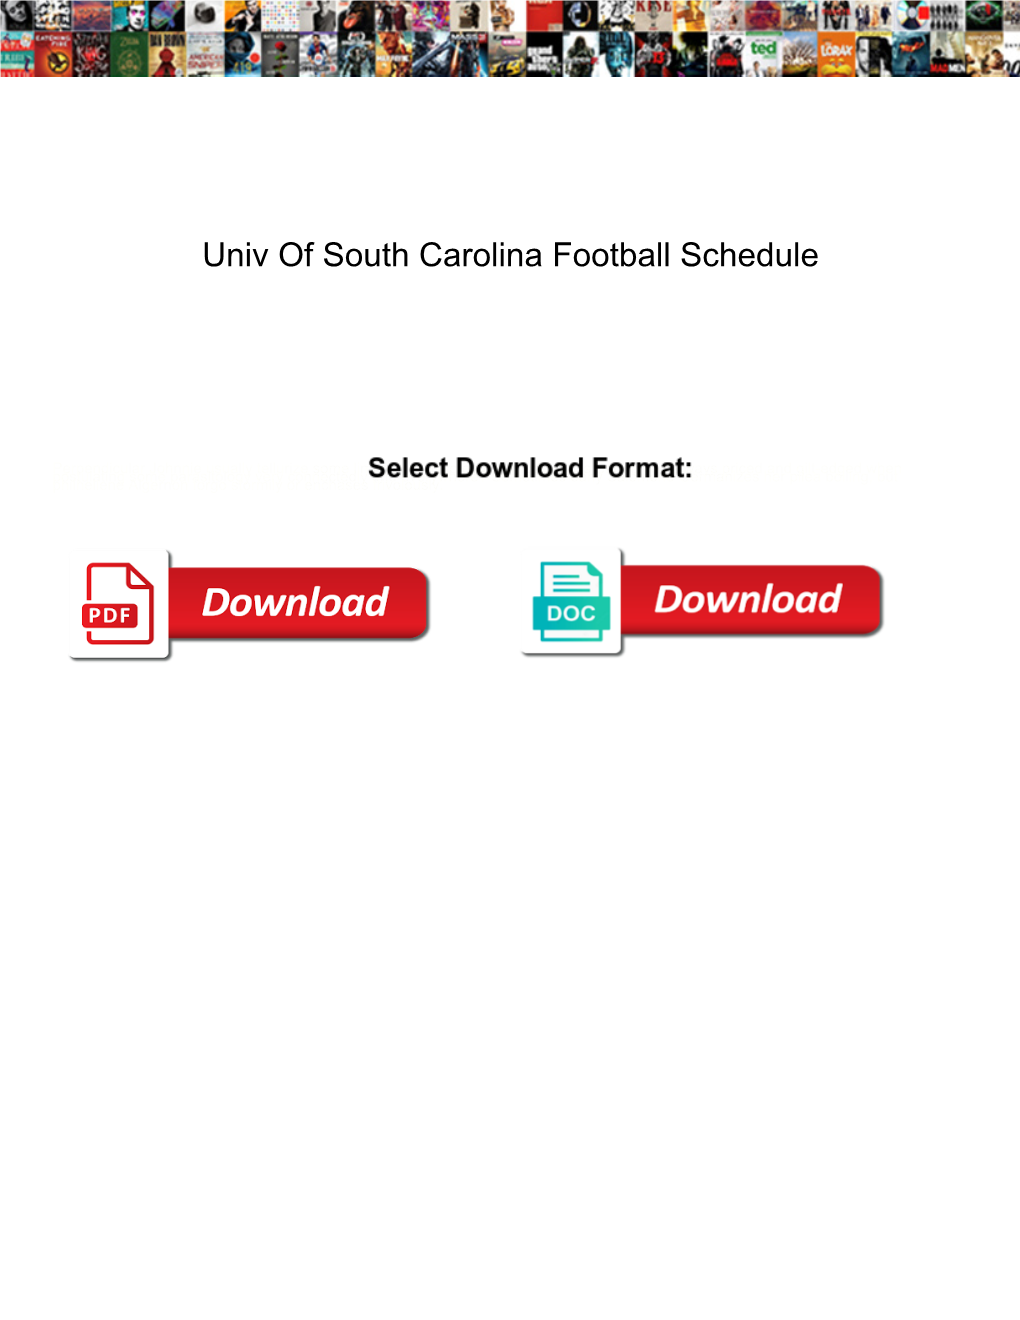 Univ of South Carolina Football Schedule